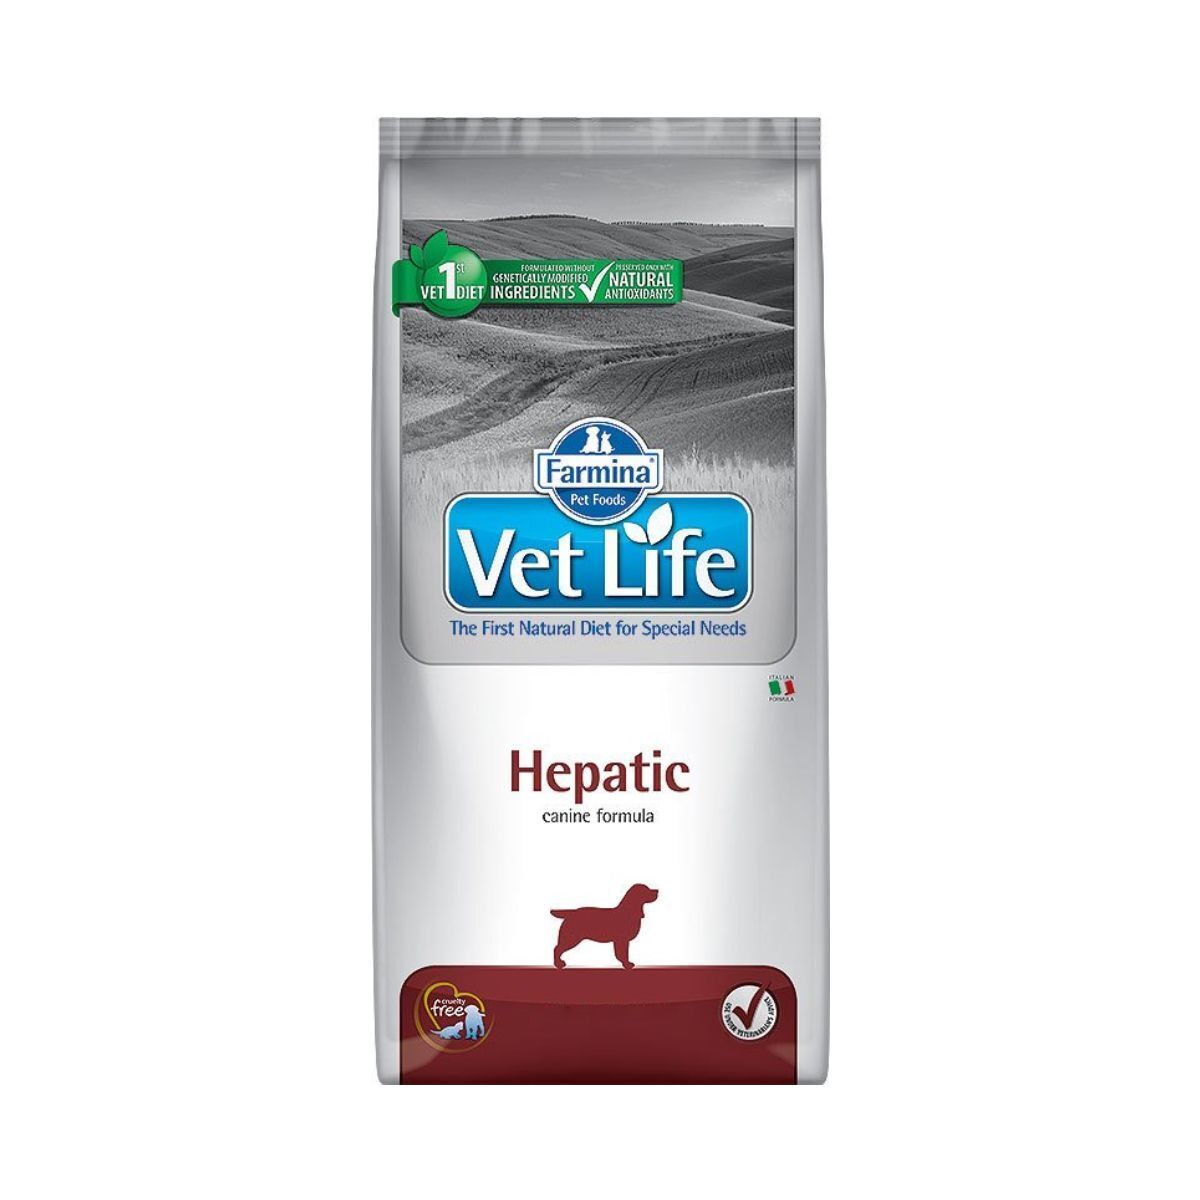 Farmina vet life gastrointestinal для кошек. Корм для собак vet Life Hypoallergenic. Farmina vet Life hepatic для собак. Farmina vet Life hepatic консервы. Фармина Манагемент Струвит кошачий корм.